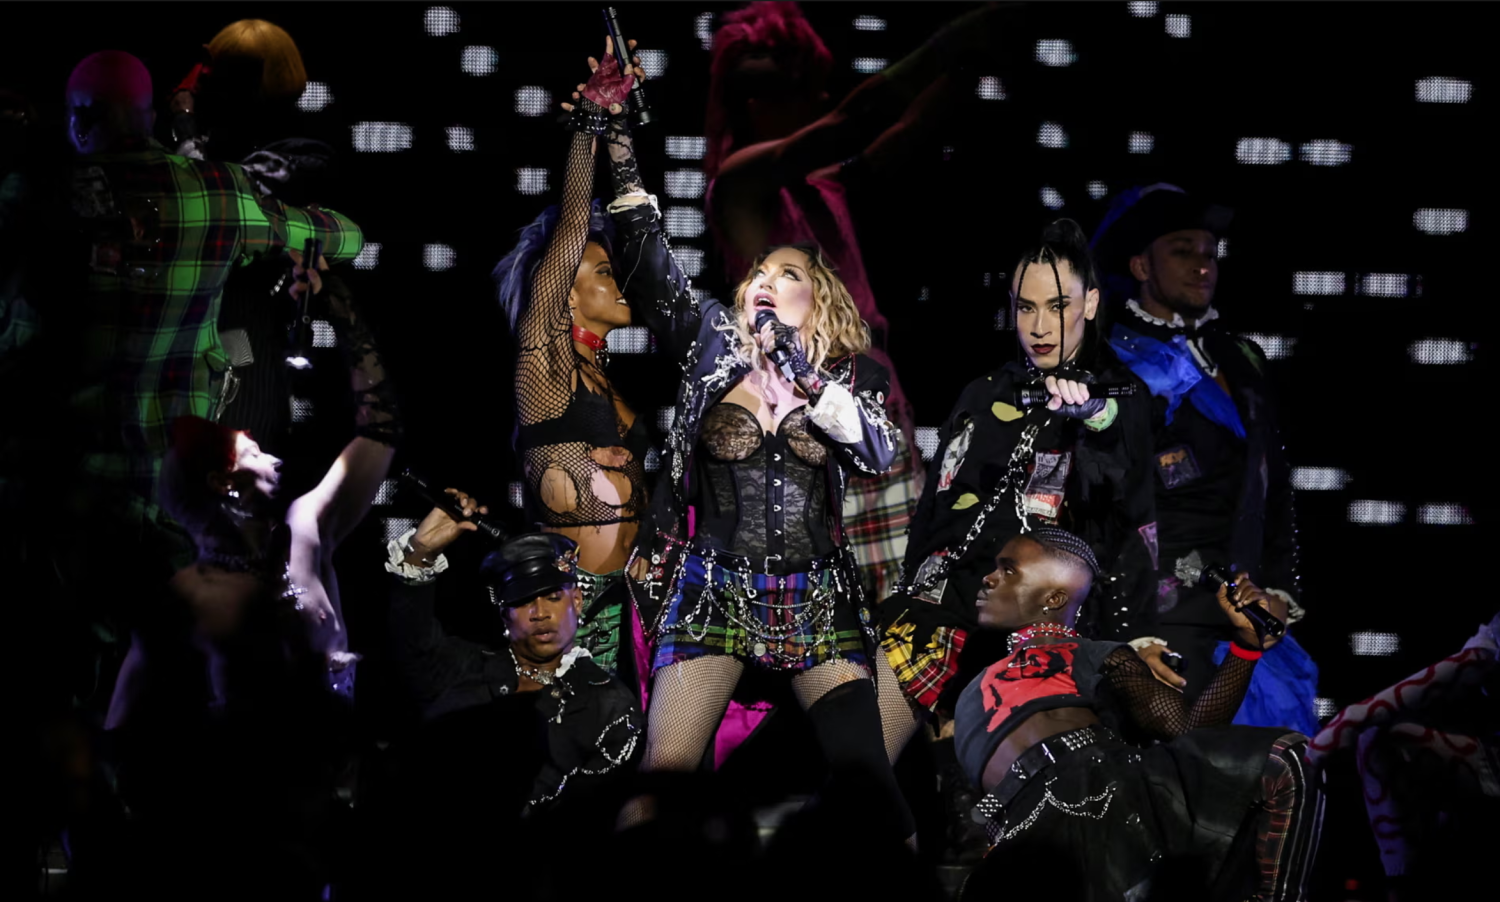 Free Madonna concert draws crowd of 1.6m to Brazil’s Copacabana beach